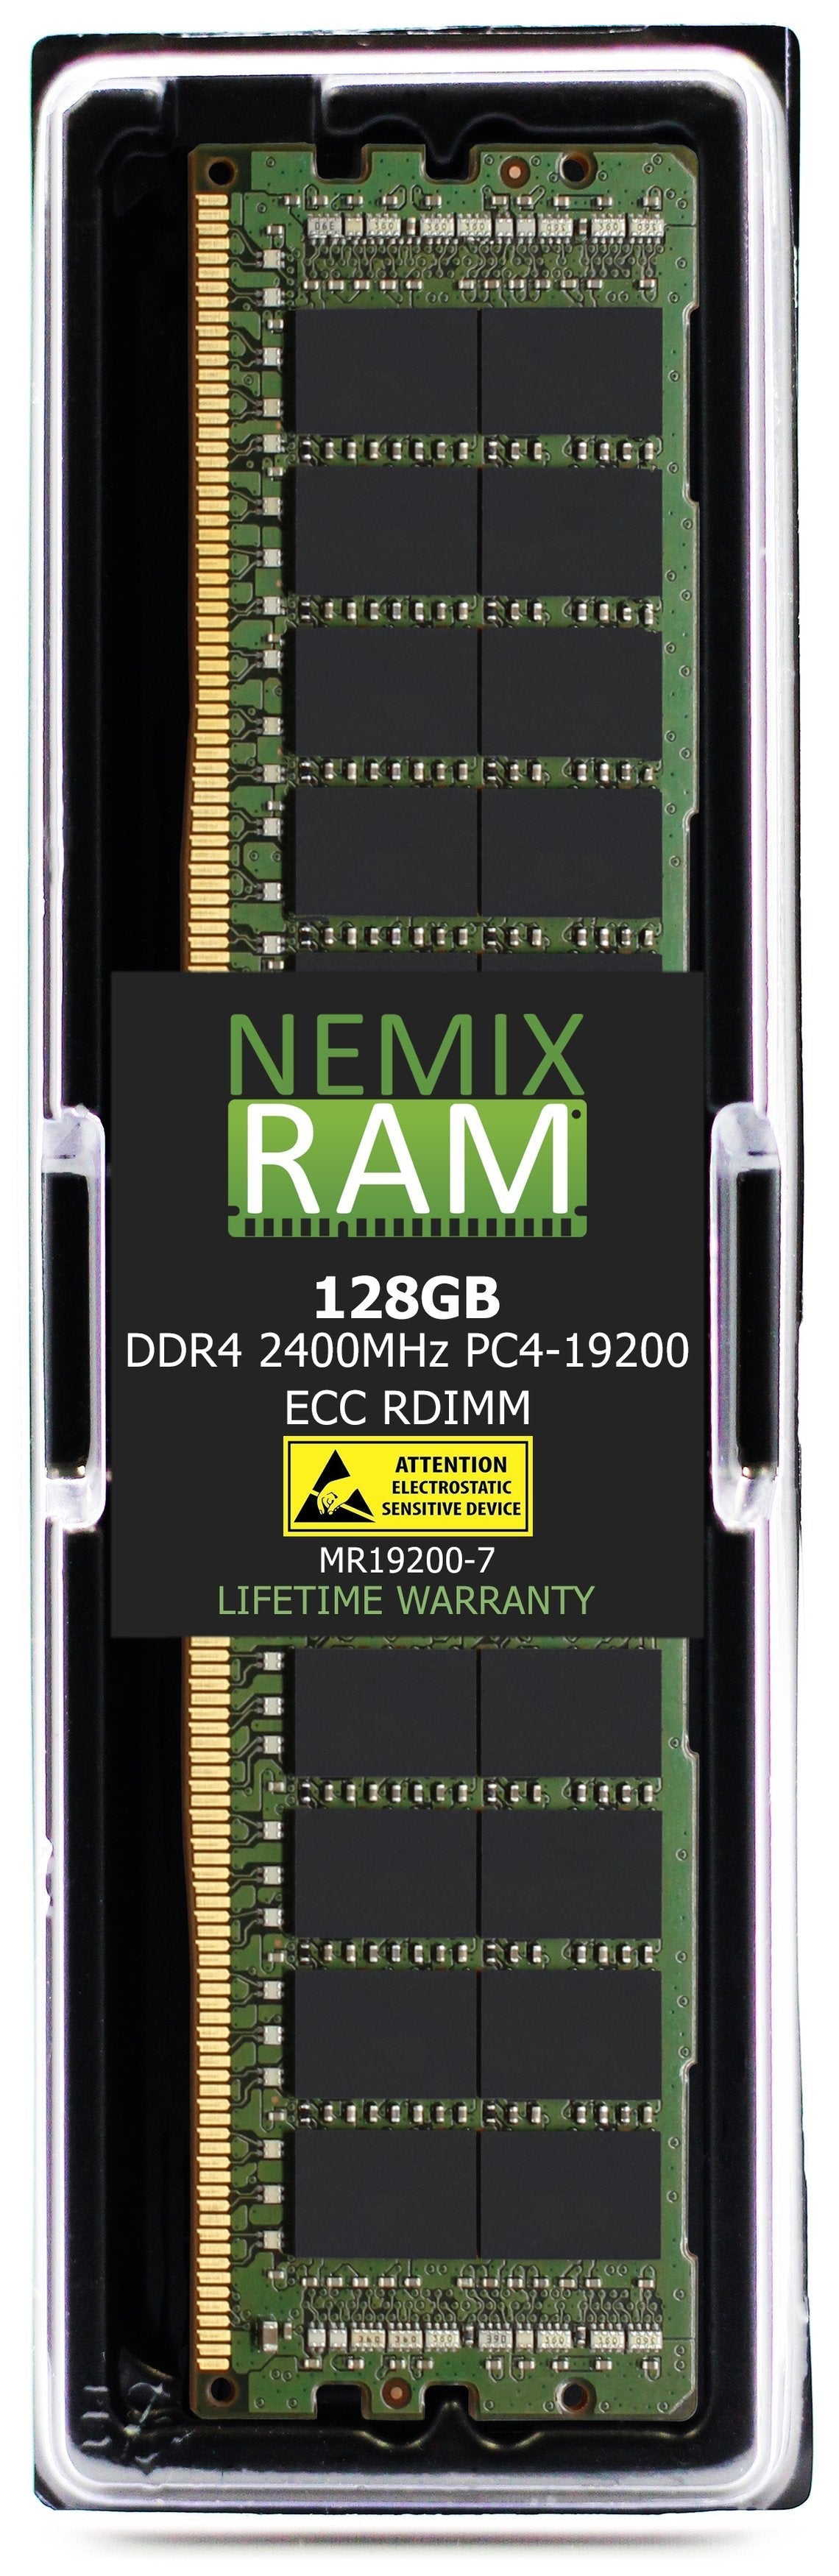 DDR4 2400MHZ PC4-19200 RDIMM